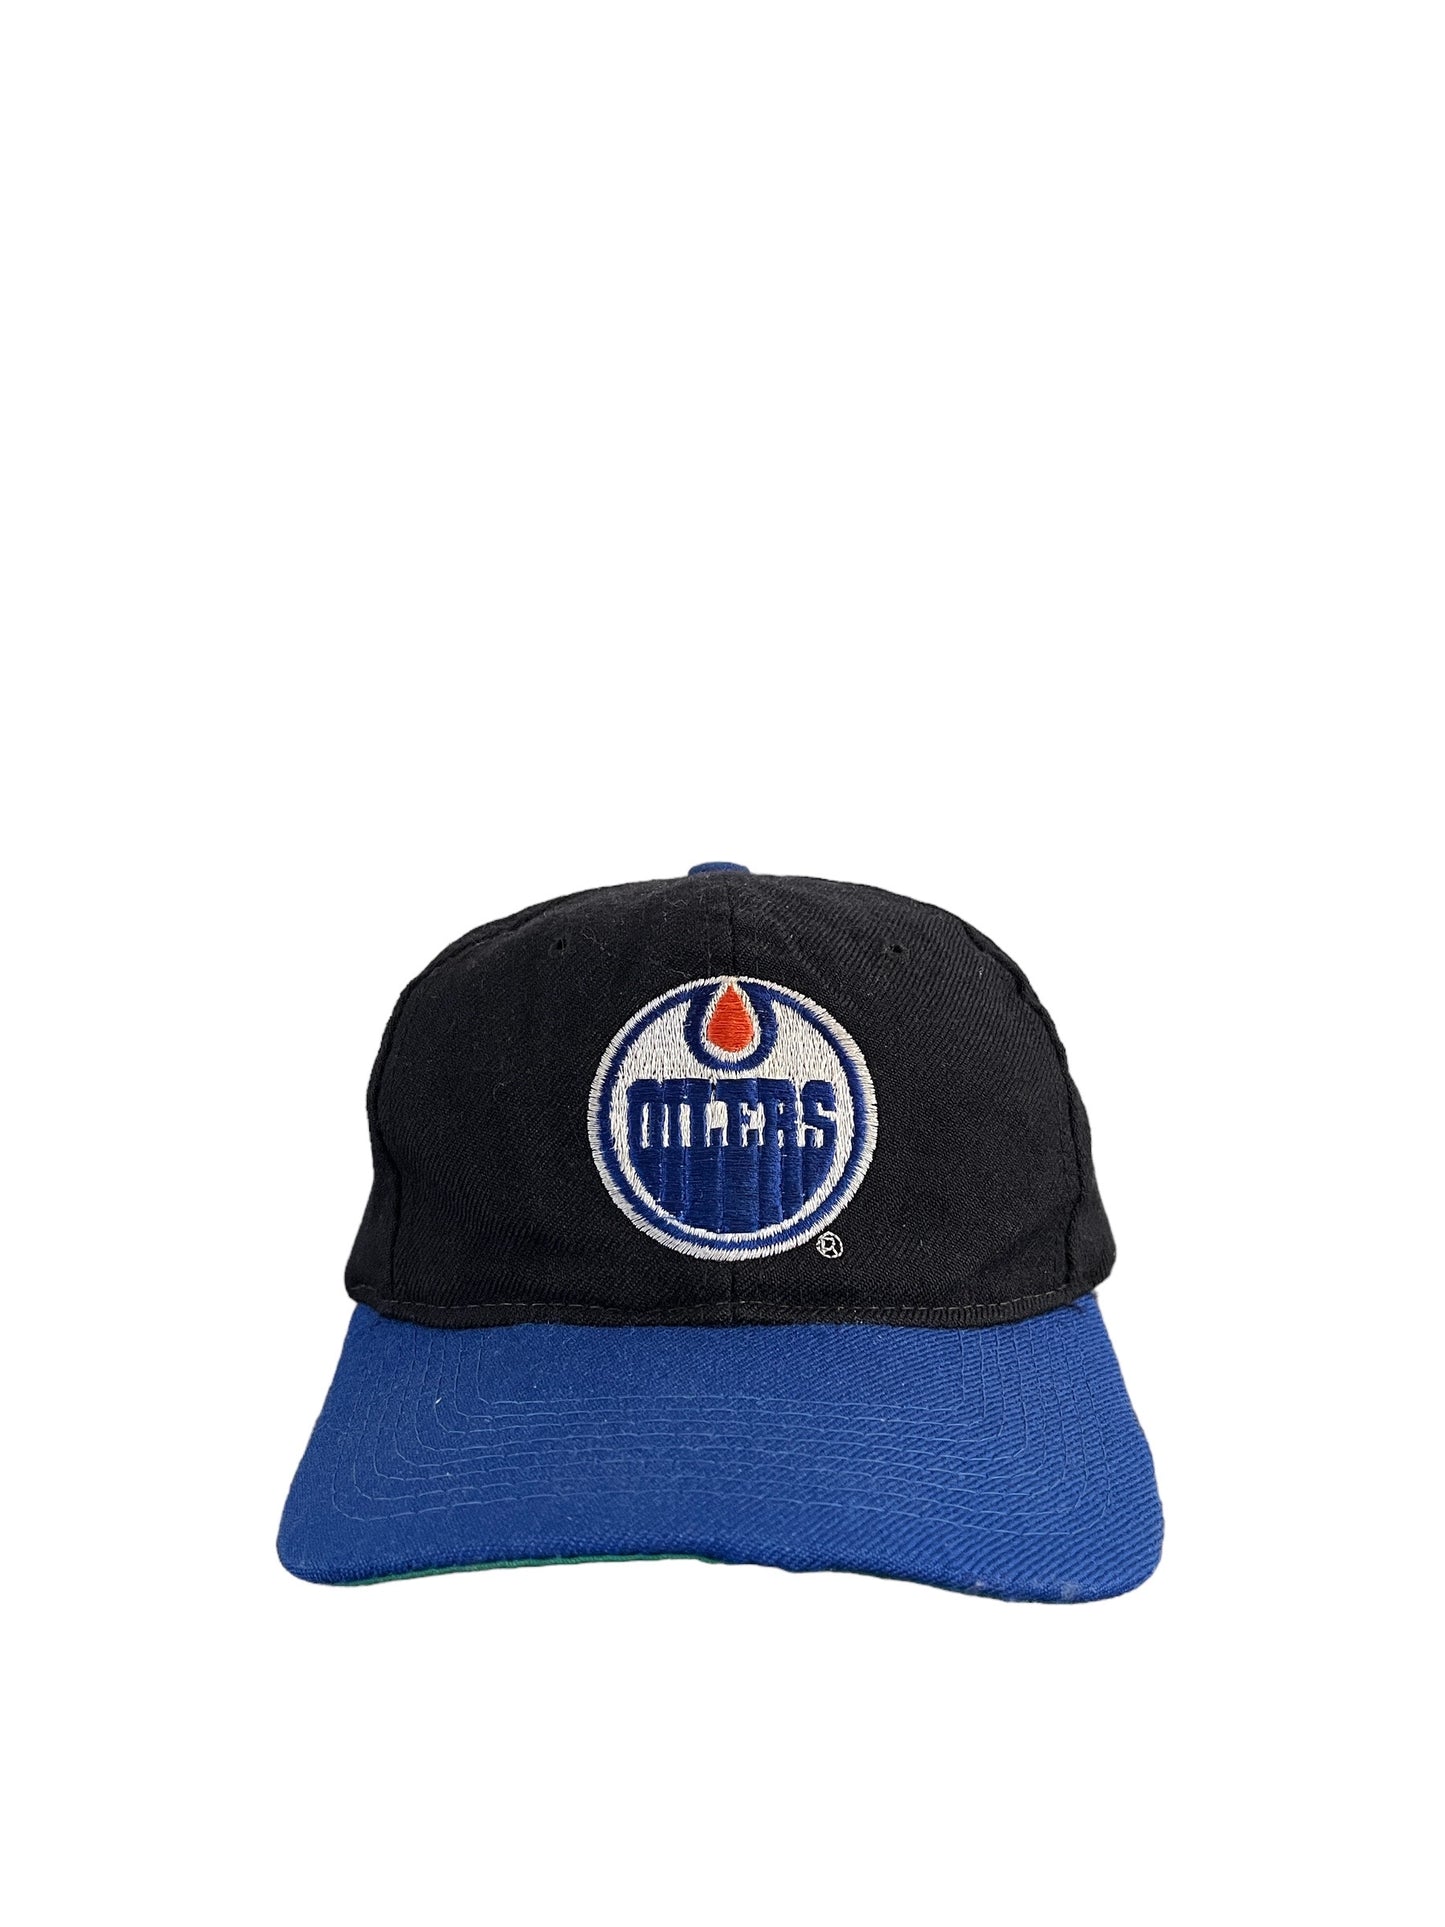 Rare First Gen Vintage 90's Starter Black Dome Edmonton Oilers Hat